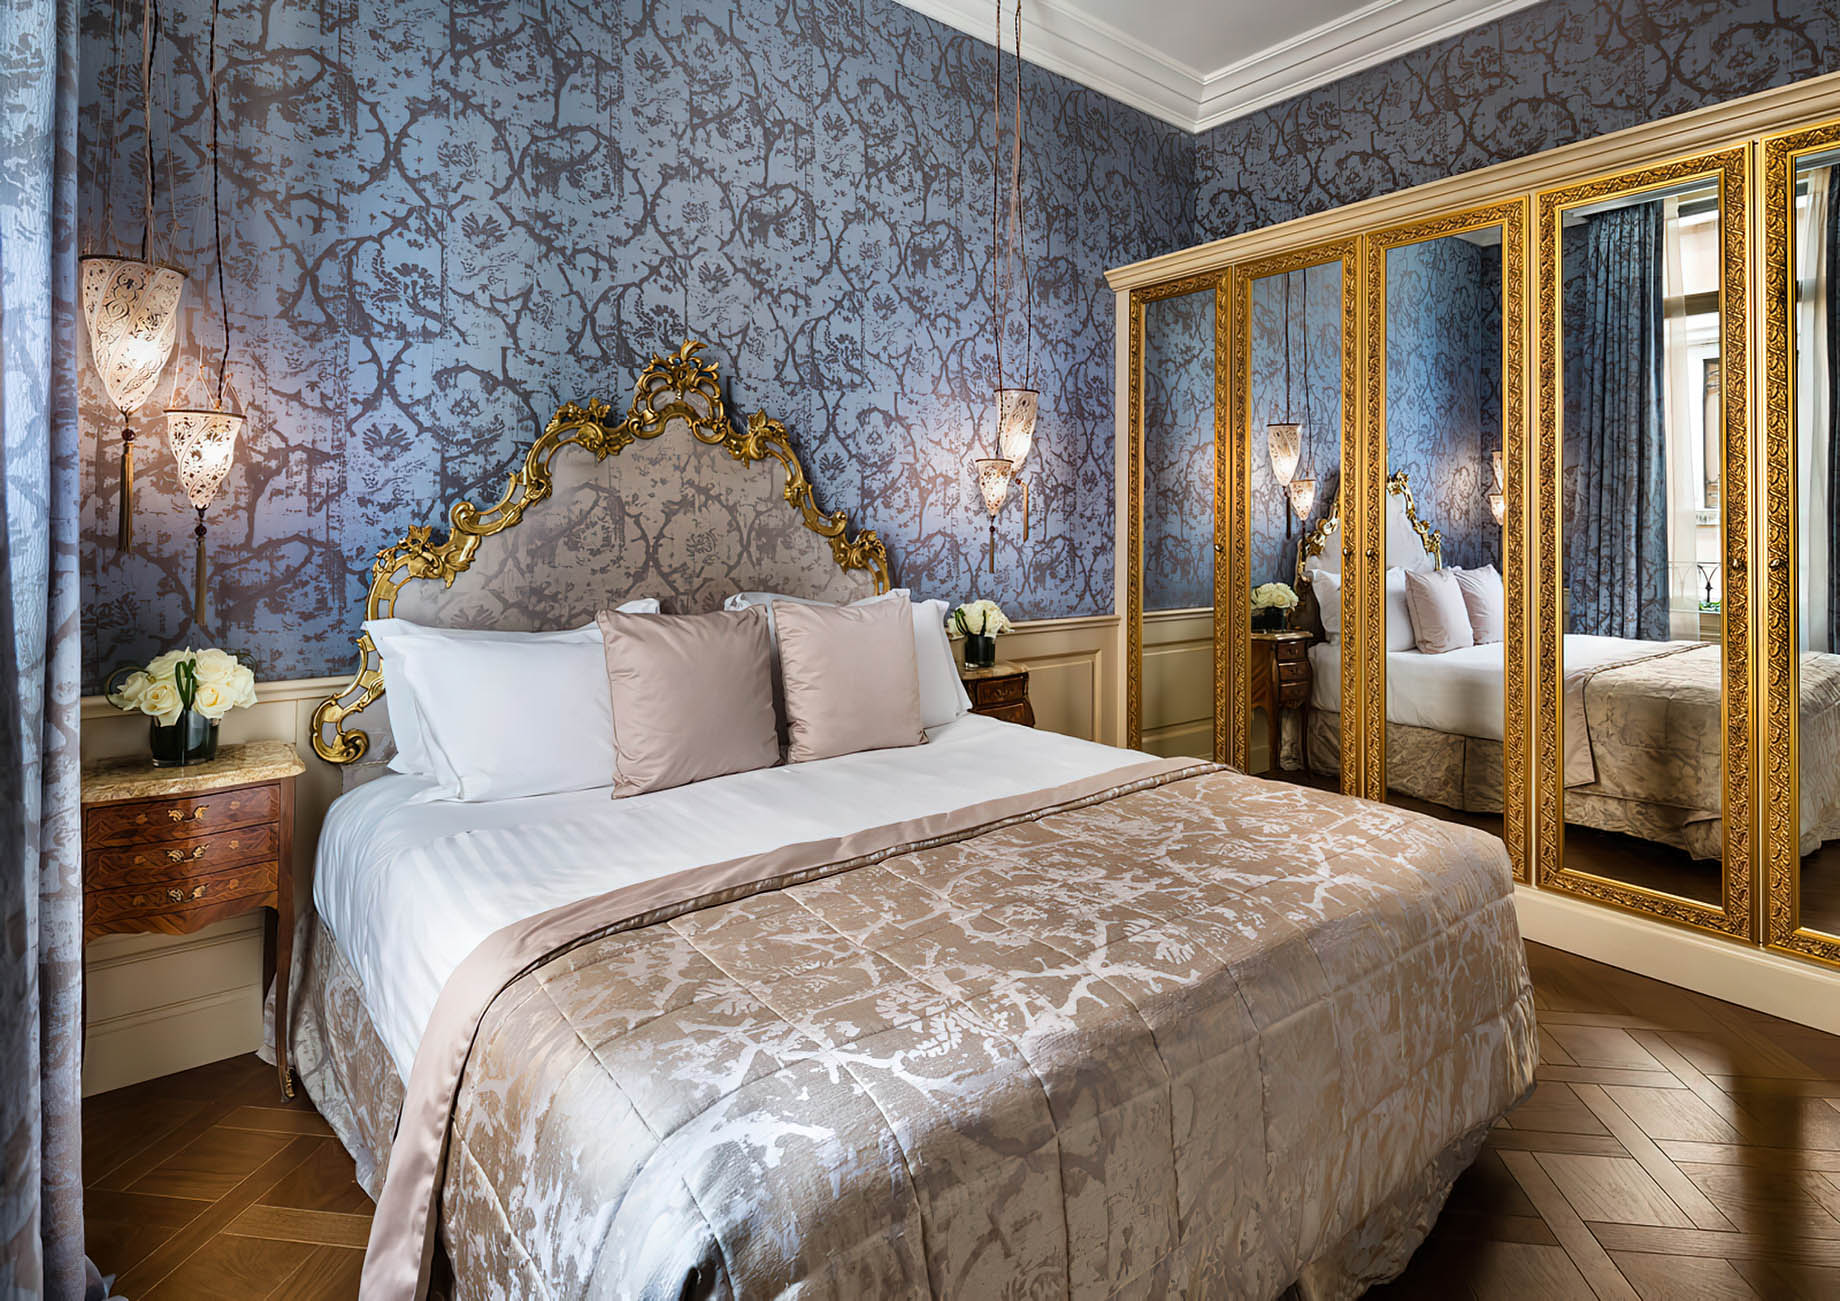 Baglioni Hotel Luna, Venezia - Venice, Italy - Deluxe Suite Bedroom